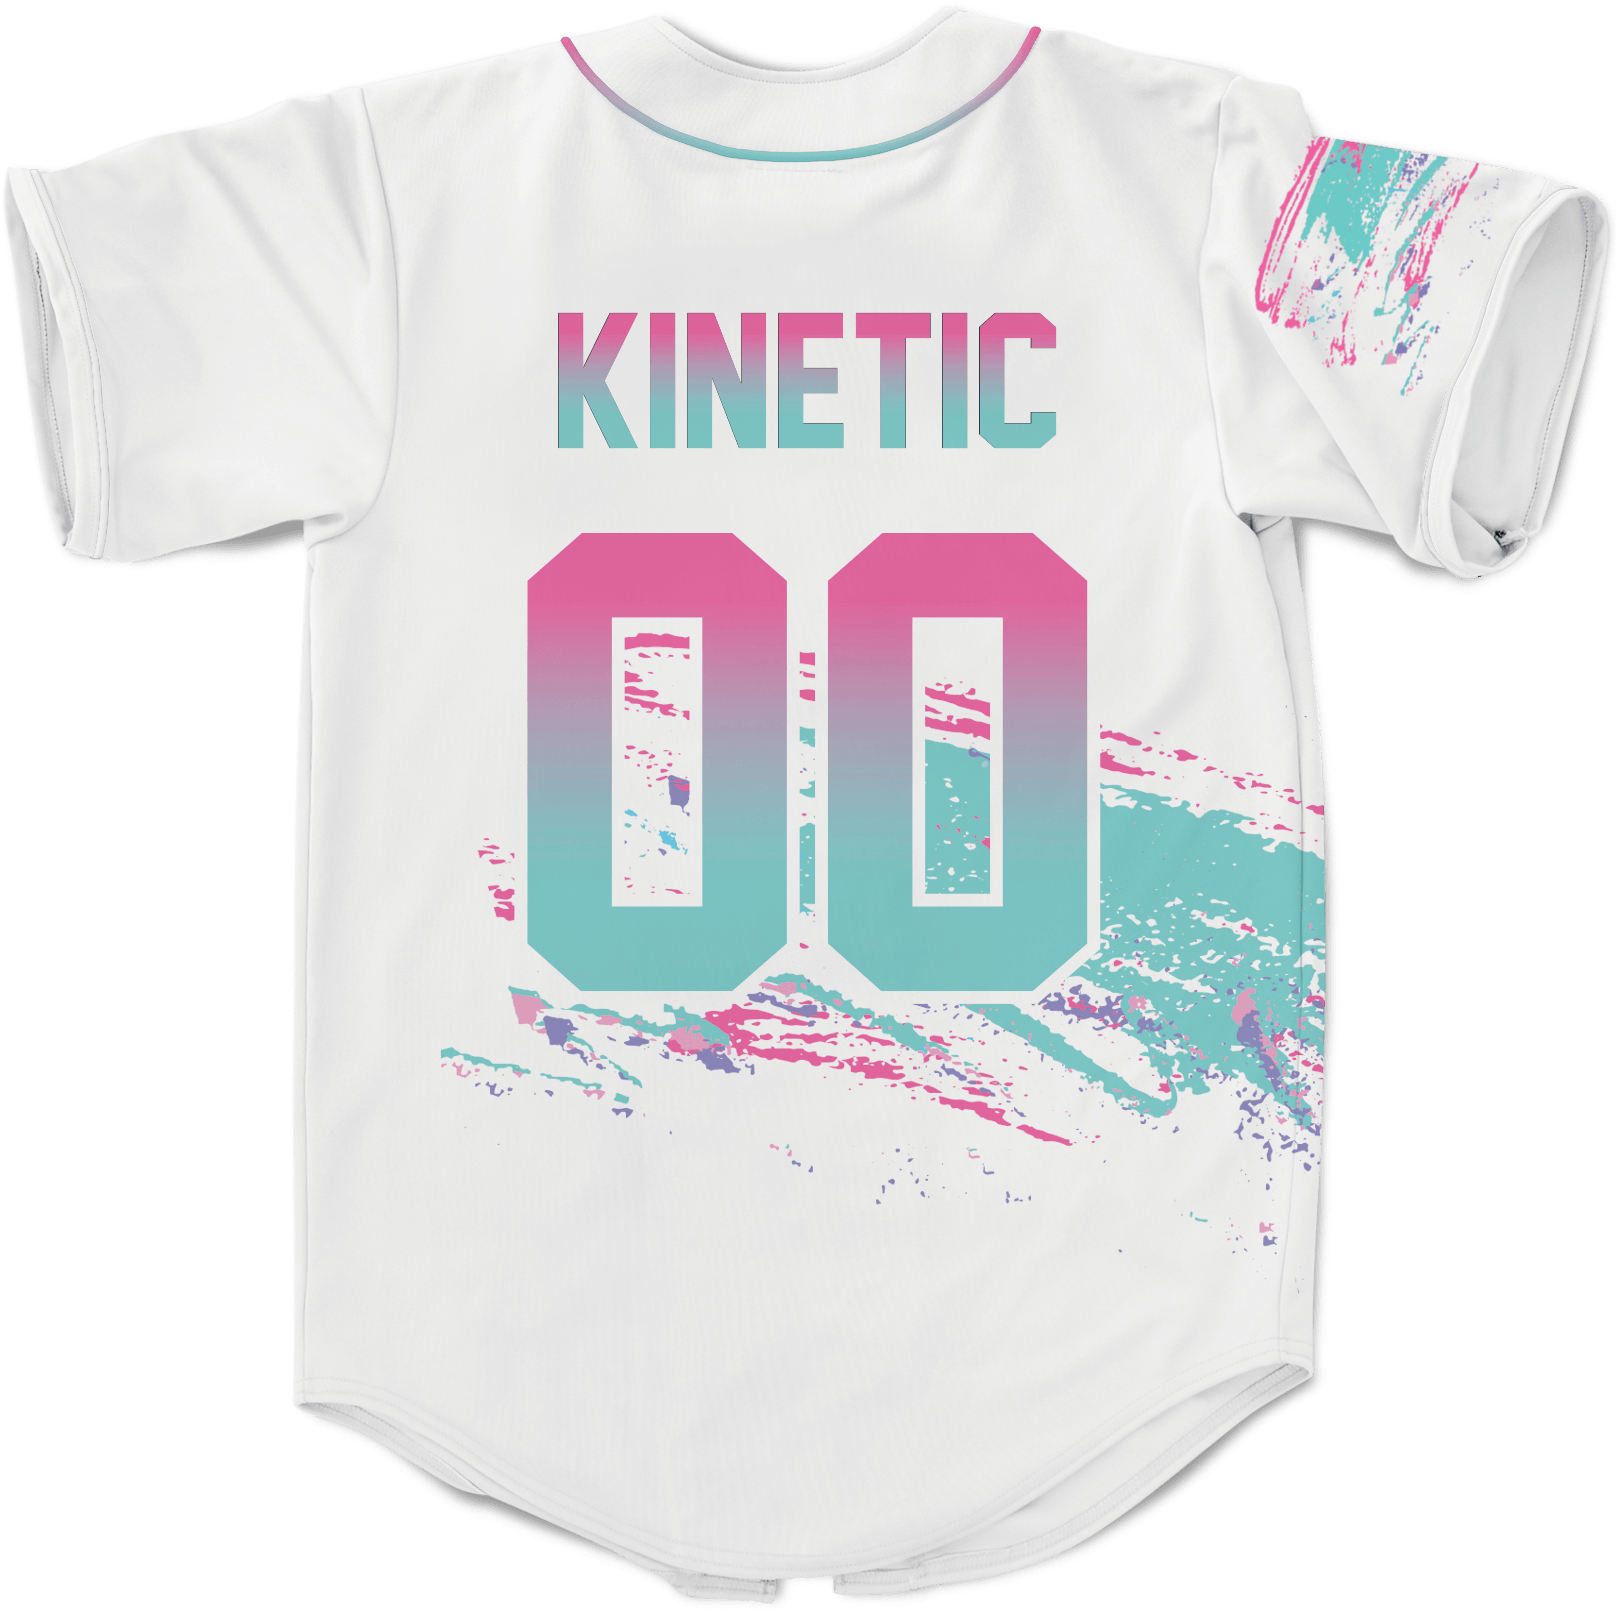 Acacia - White Miami Beach Splash Baseball Jersey - Kinetic Society